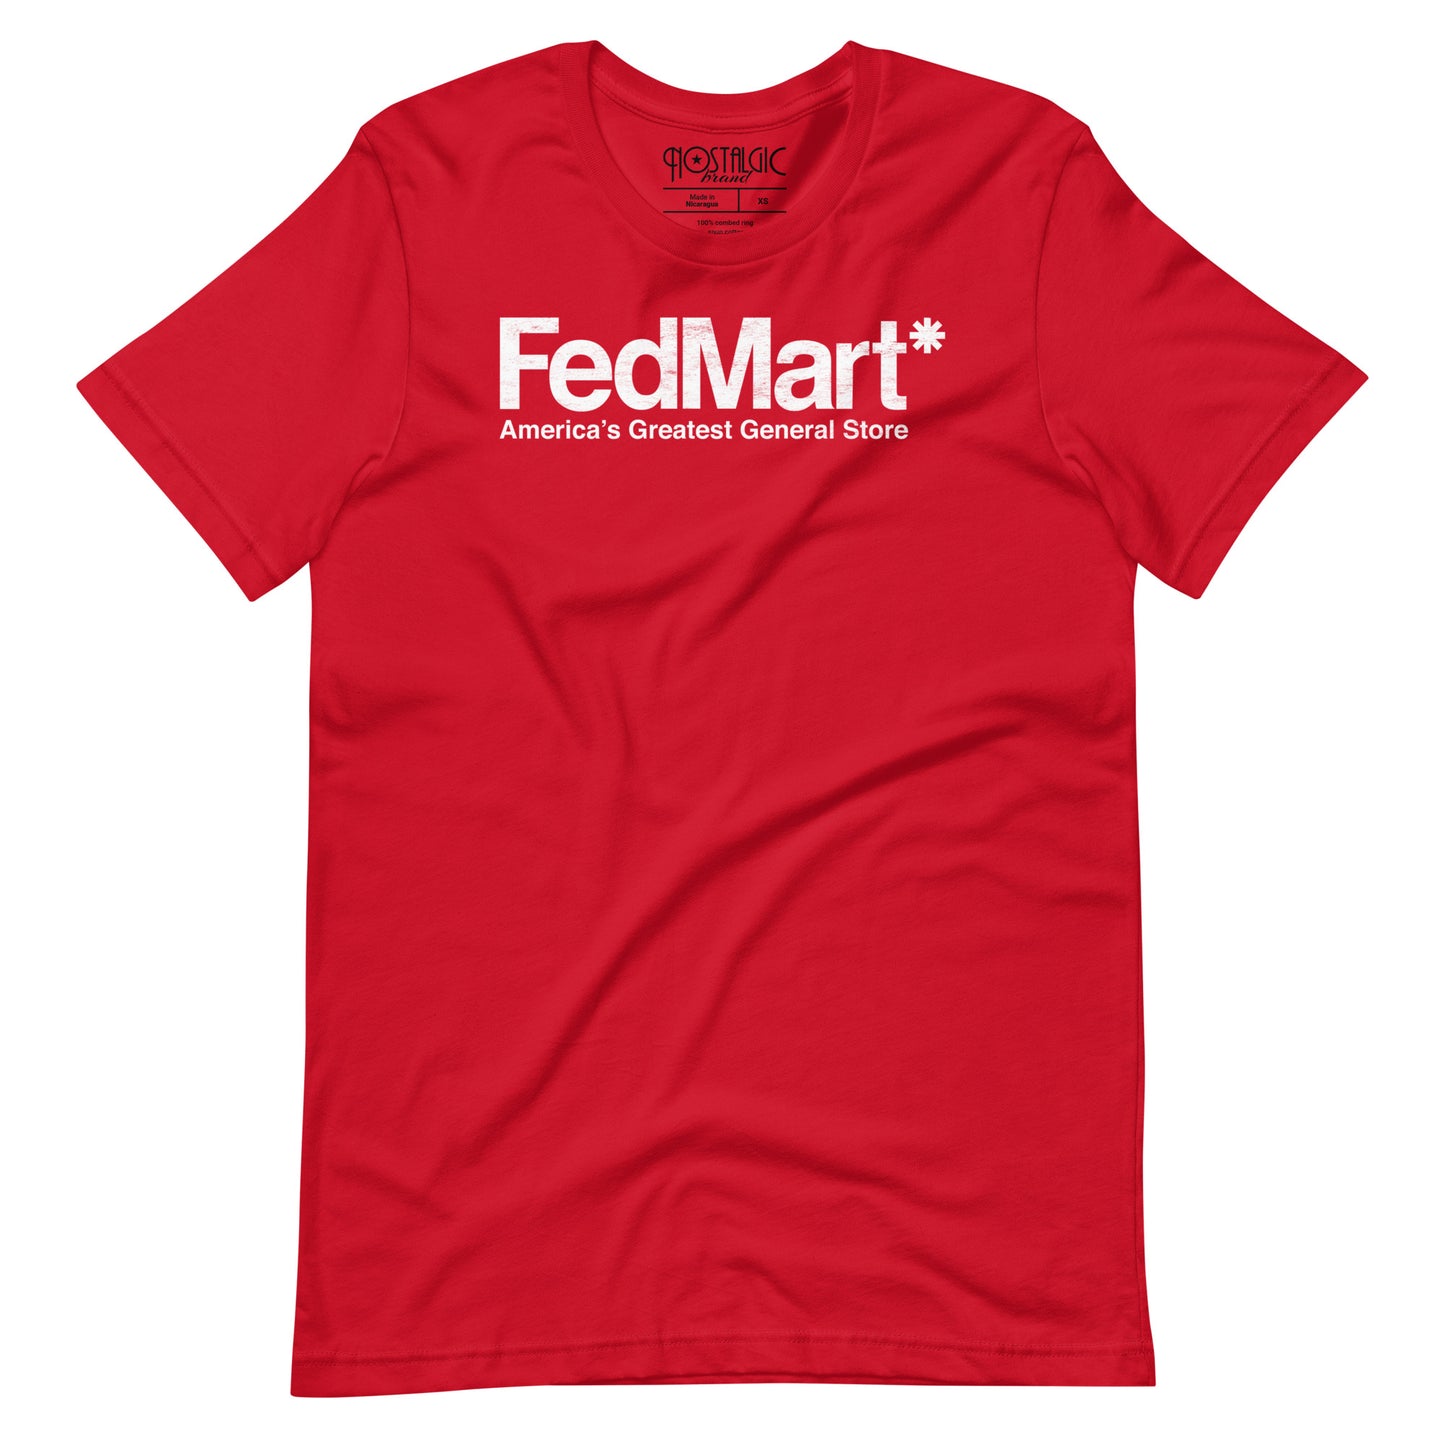 FedMart Discount Department Store